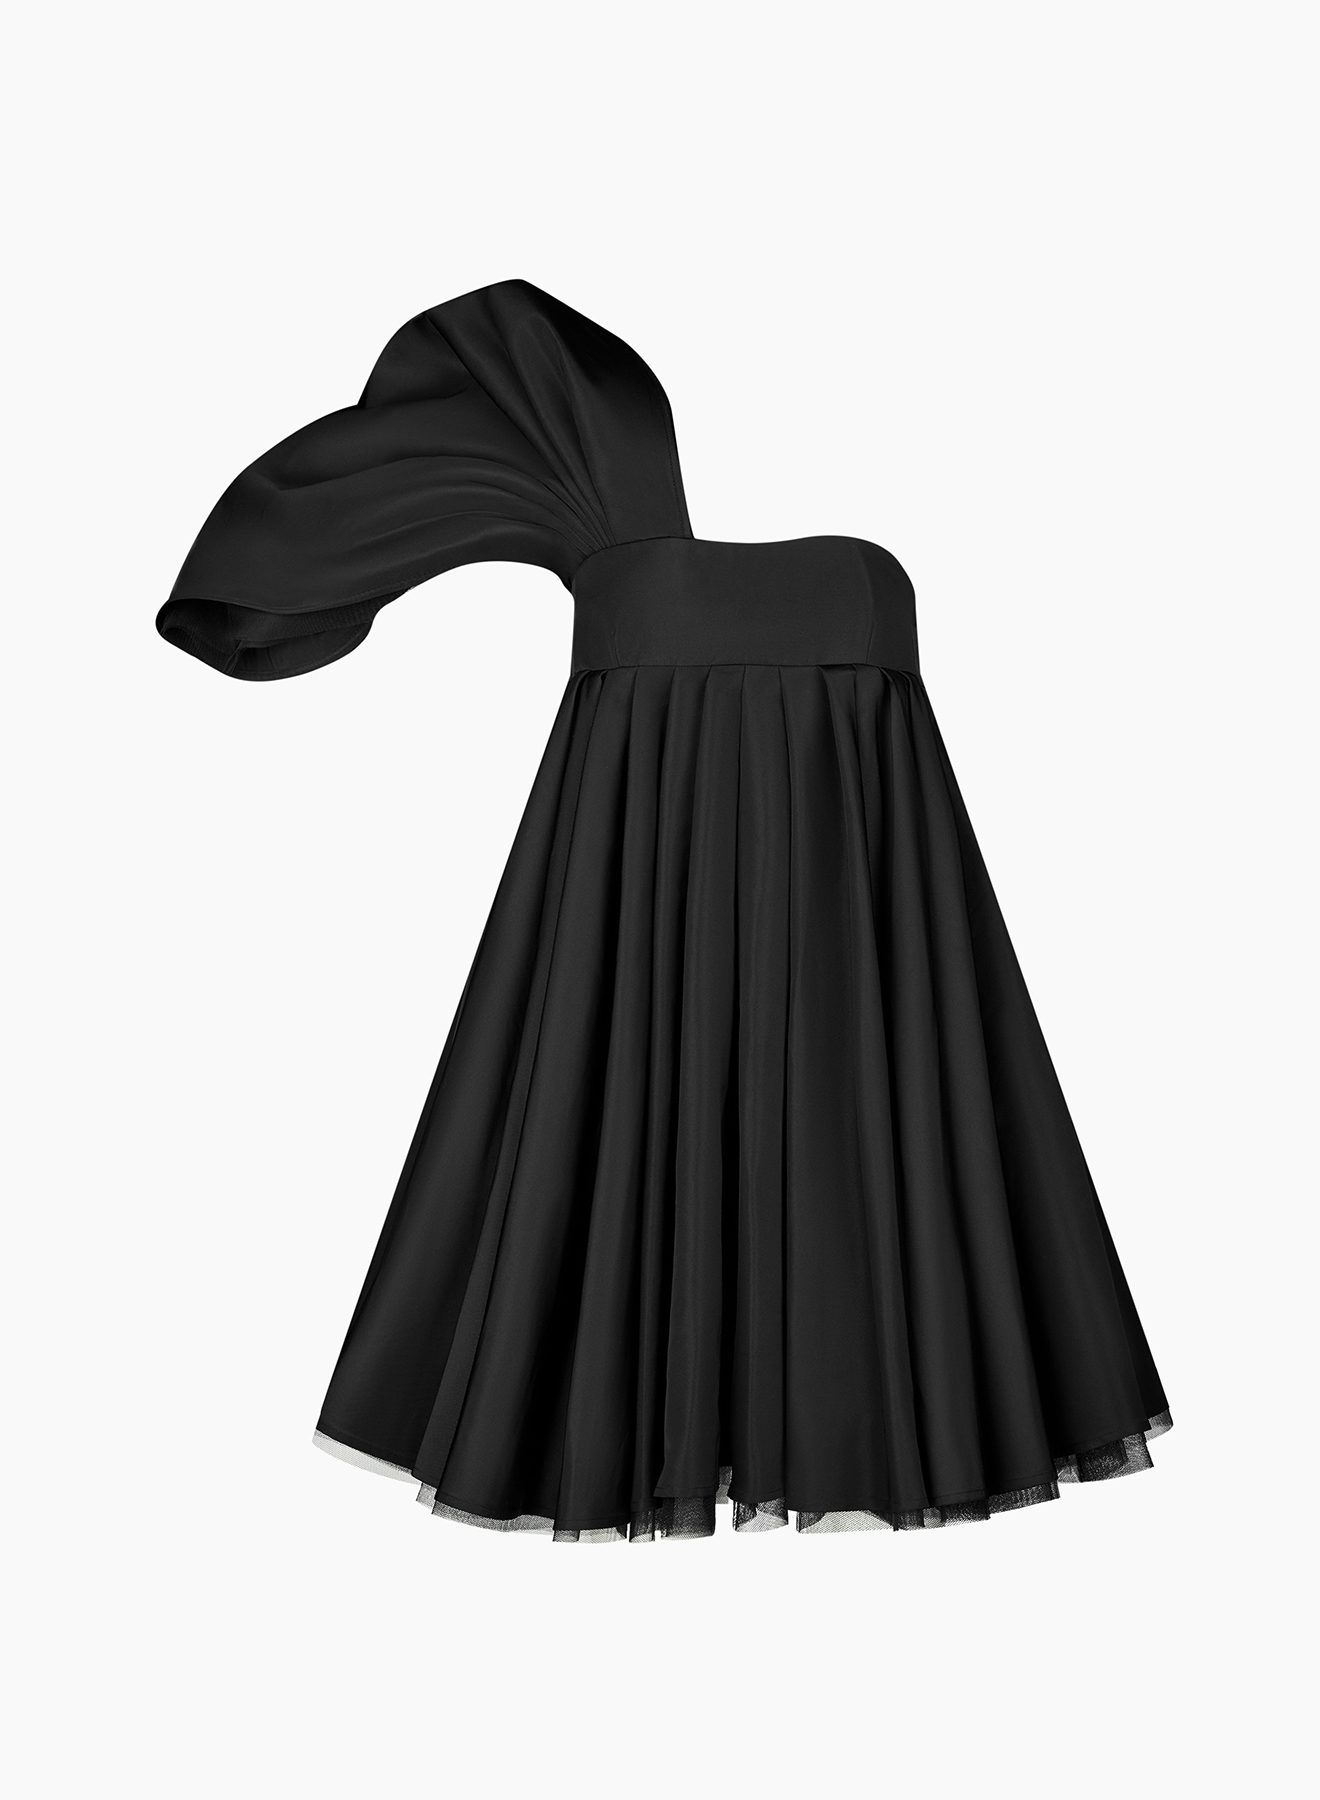 Vestido Bustier Asimétrico Corto Negro - Nina Ricci